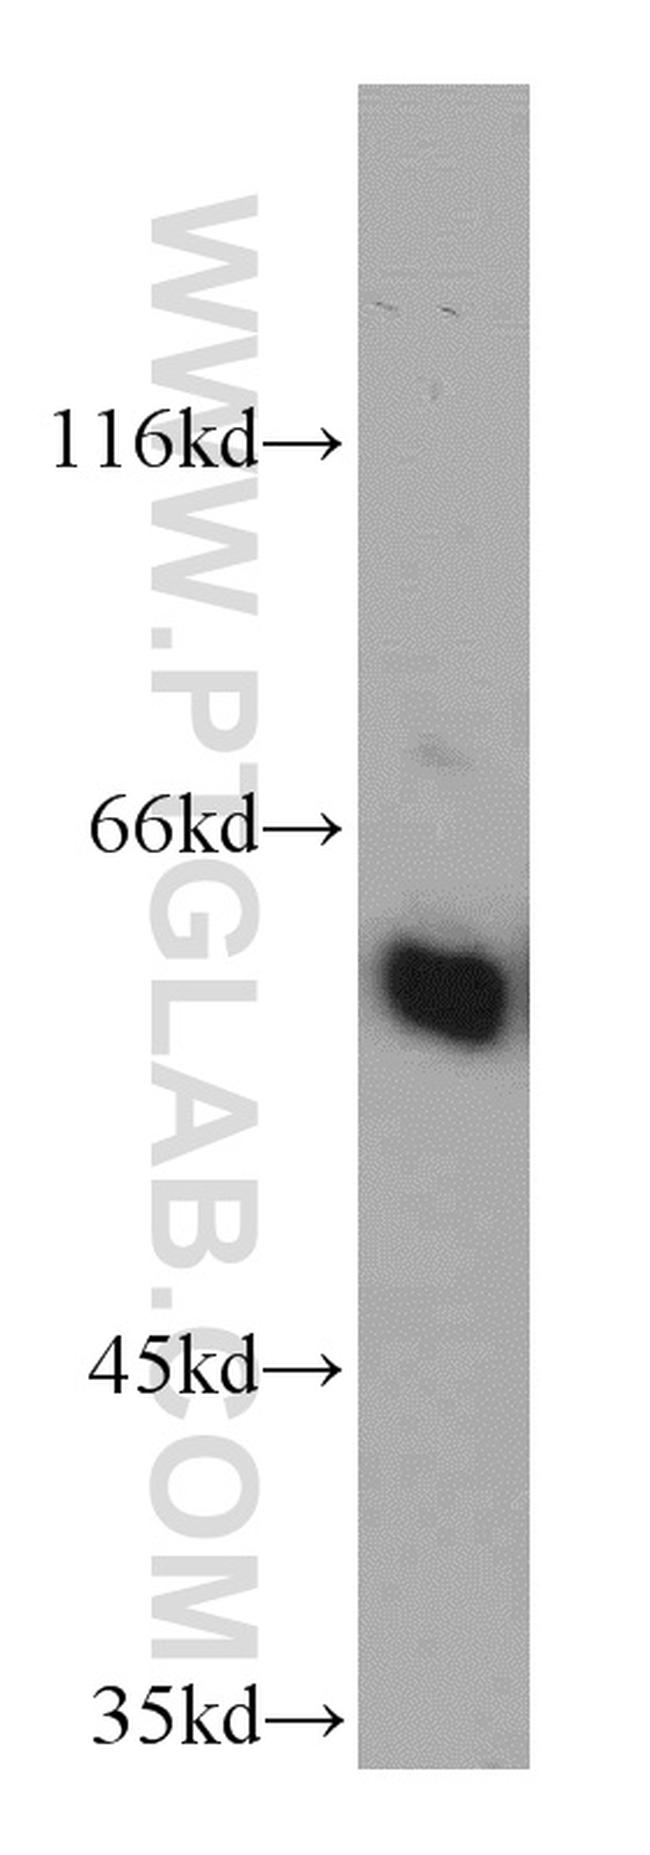 CSN1 Antibody in Western Blot (WB)